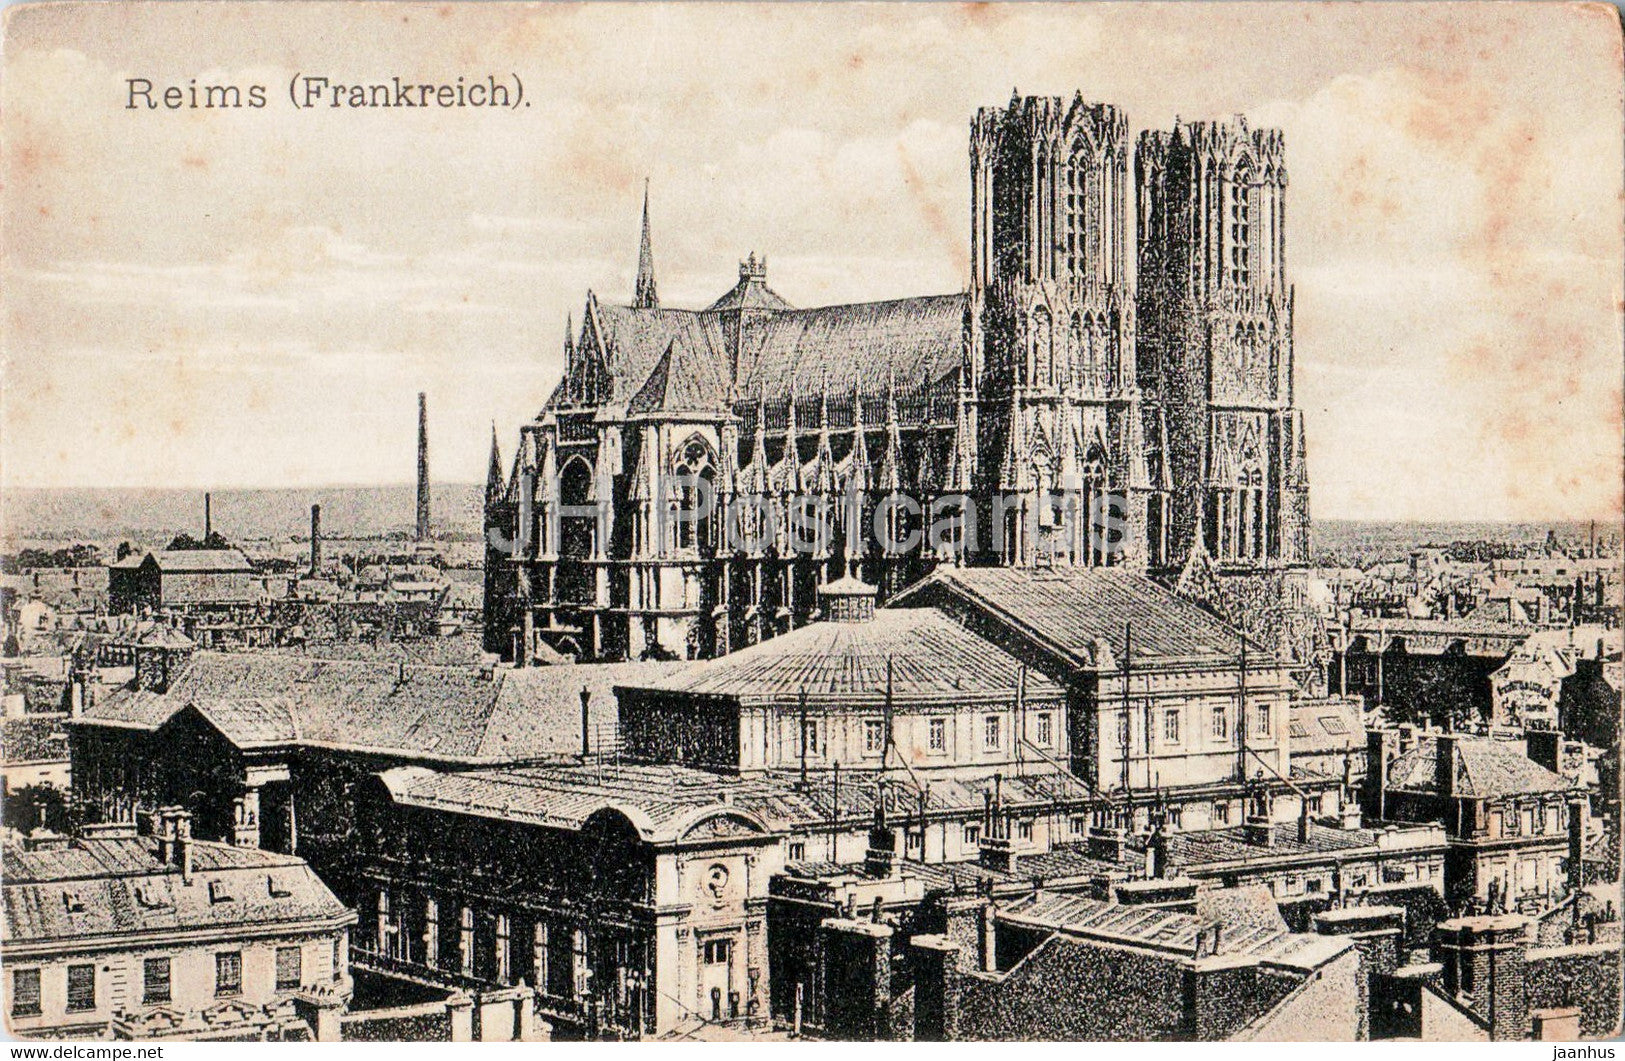 Reims - Frankreich - Feldpostkarte - 121 - old postcard - 1917 - France - used - JH Postcards